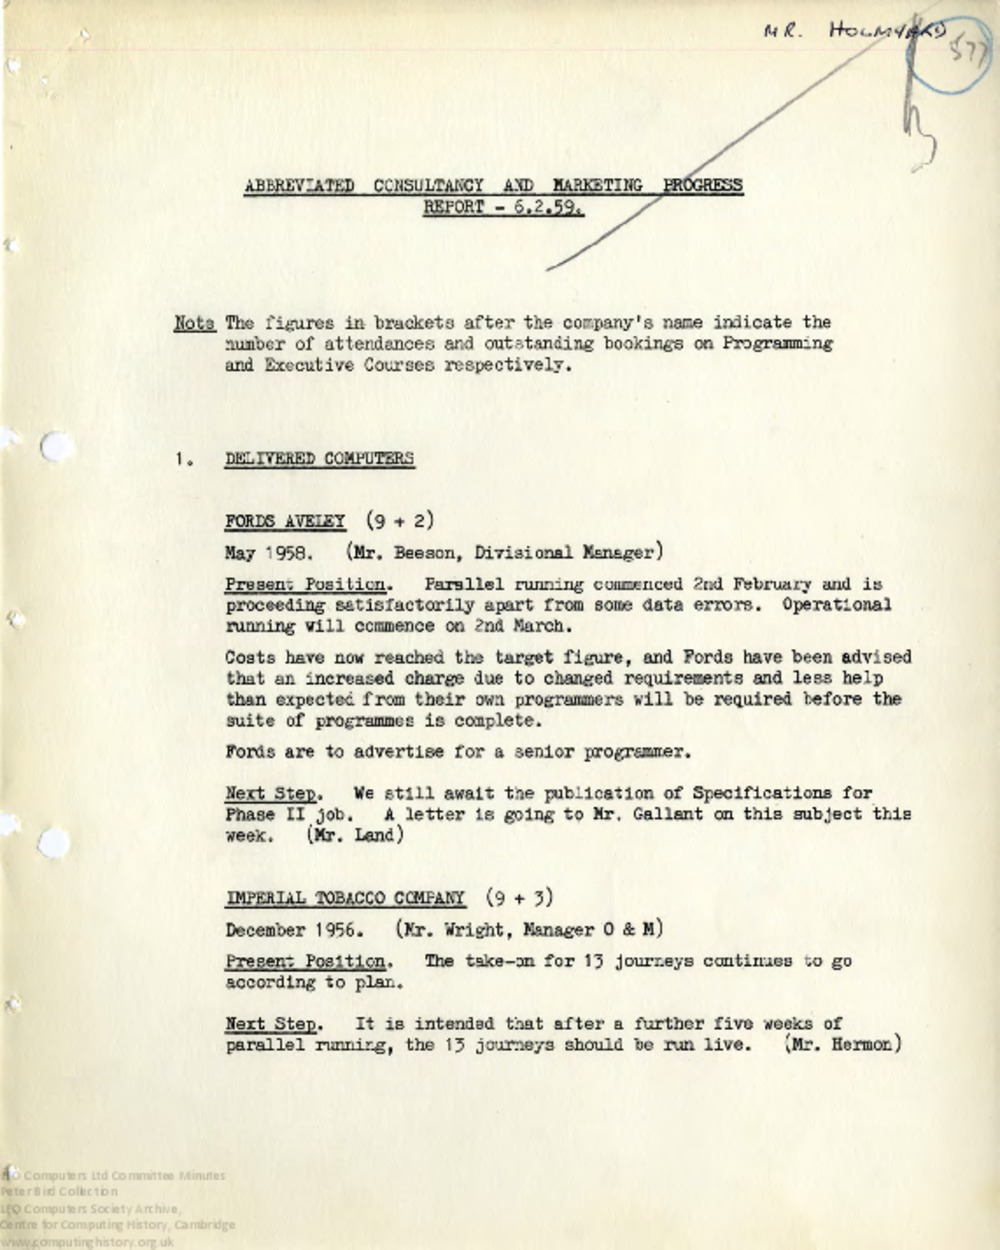 Article: 64470 Abbreviated Consultancy and Marketing Progress Report, 6th Feb 1959